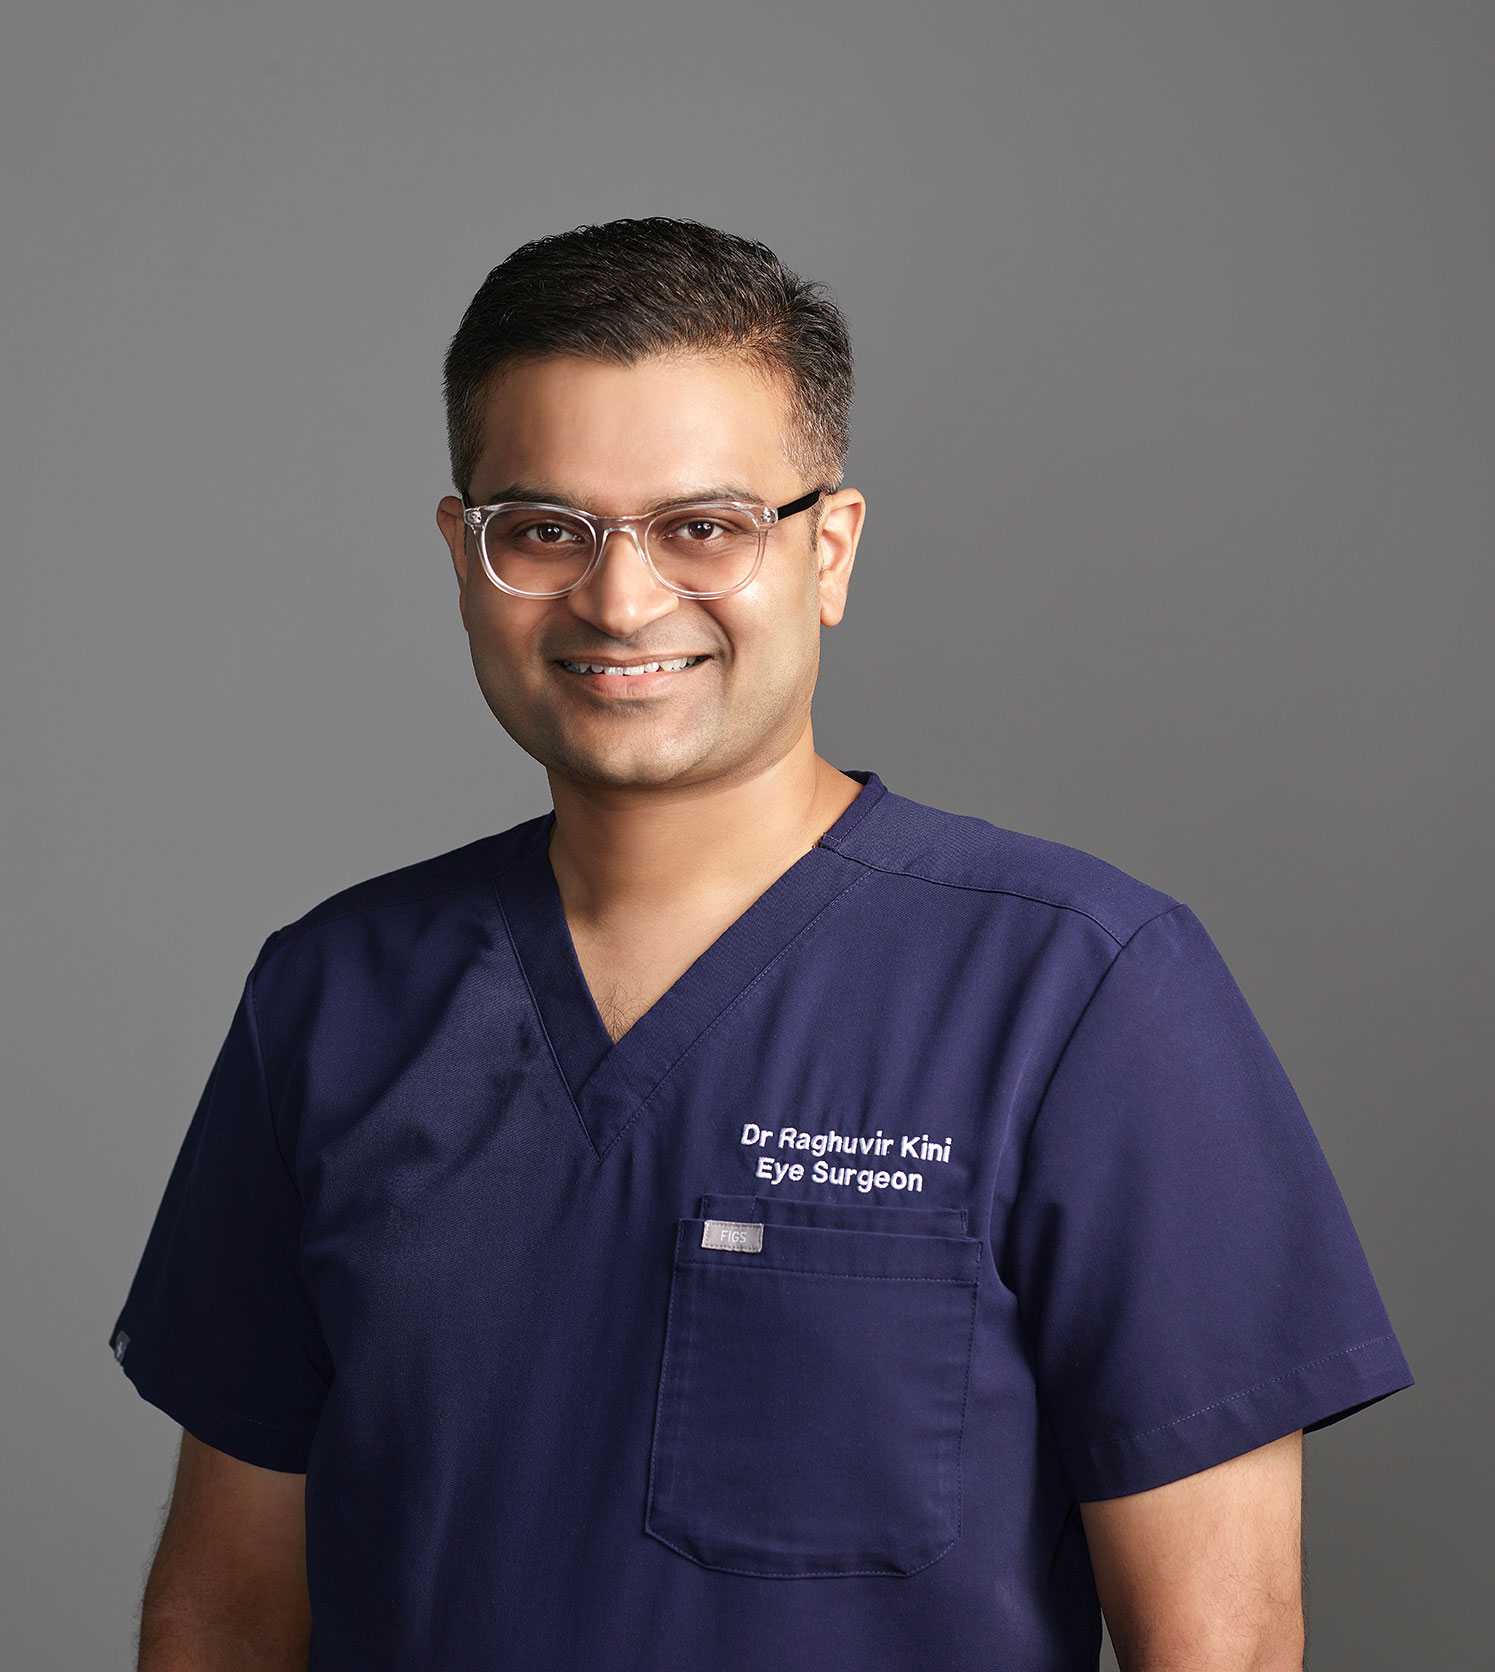 Dr Raghuvir Kini dressed in surgical scrubs